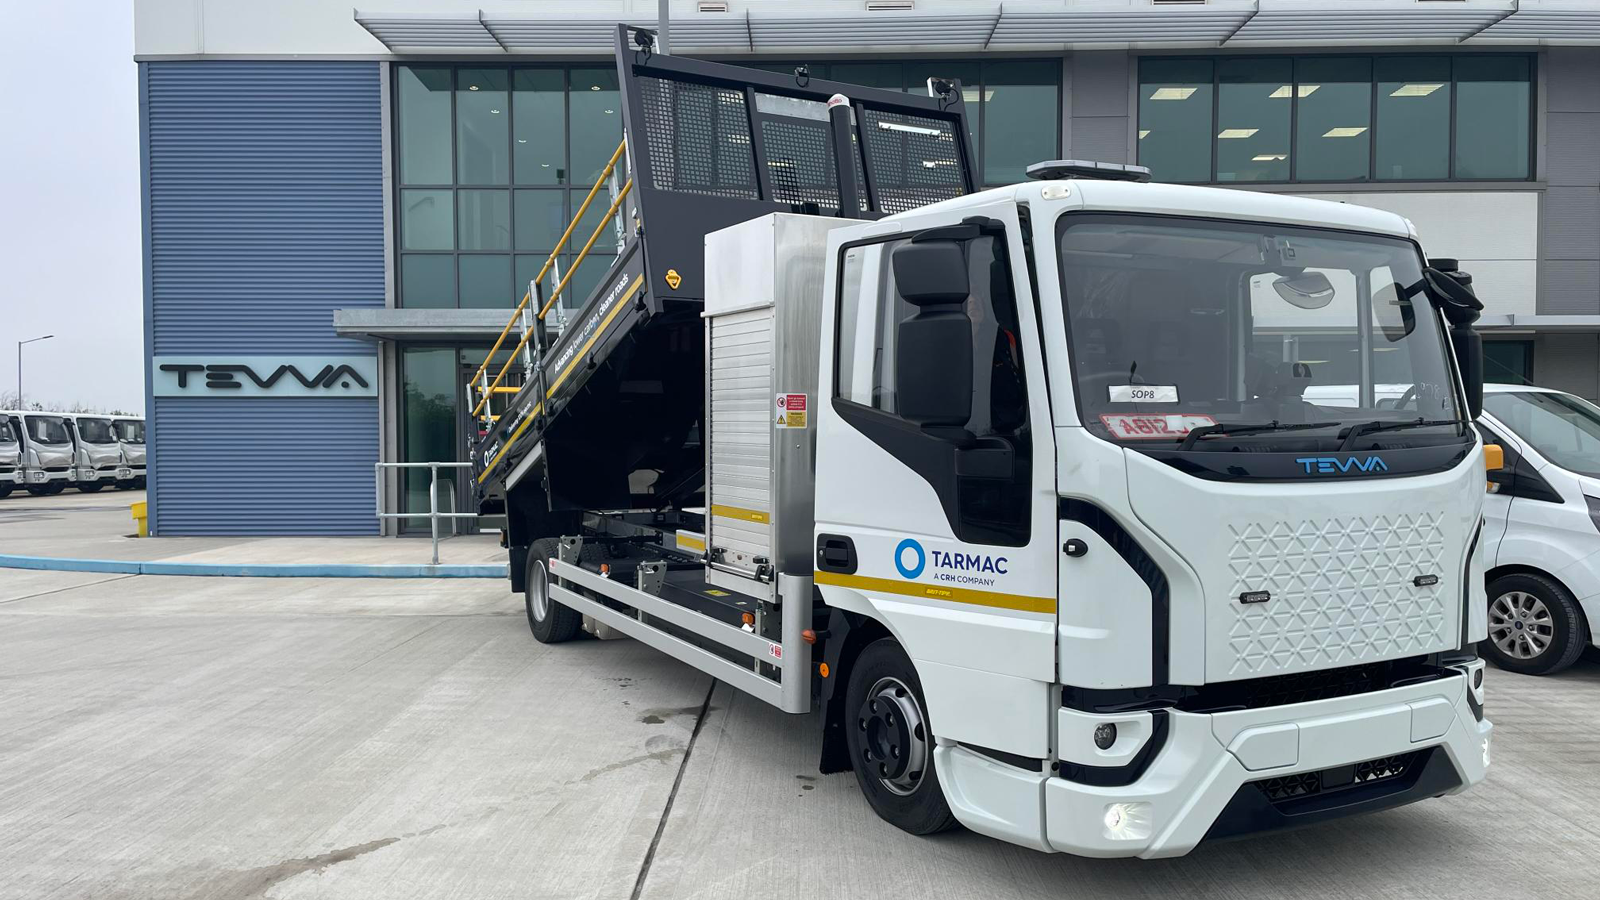 Tarmac starts trials of all-electric 7.5 tonne tipper truck